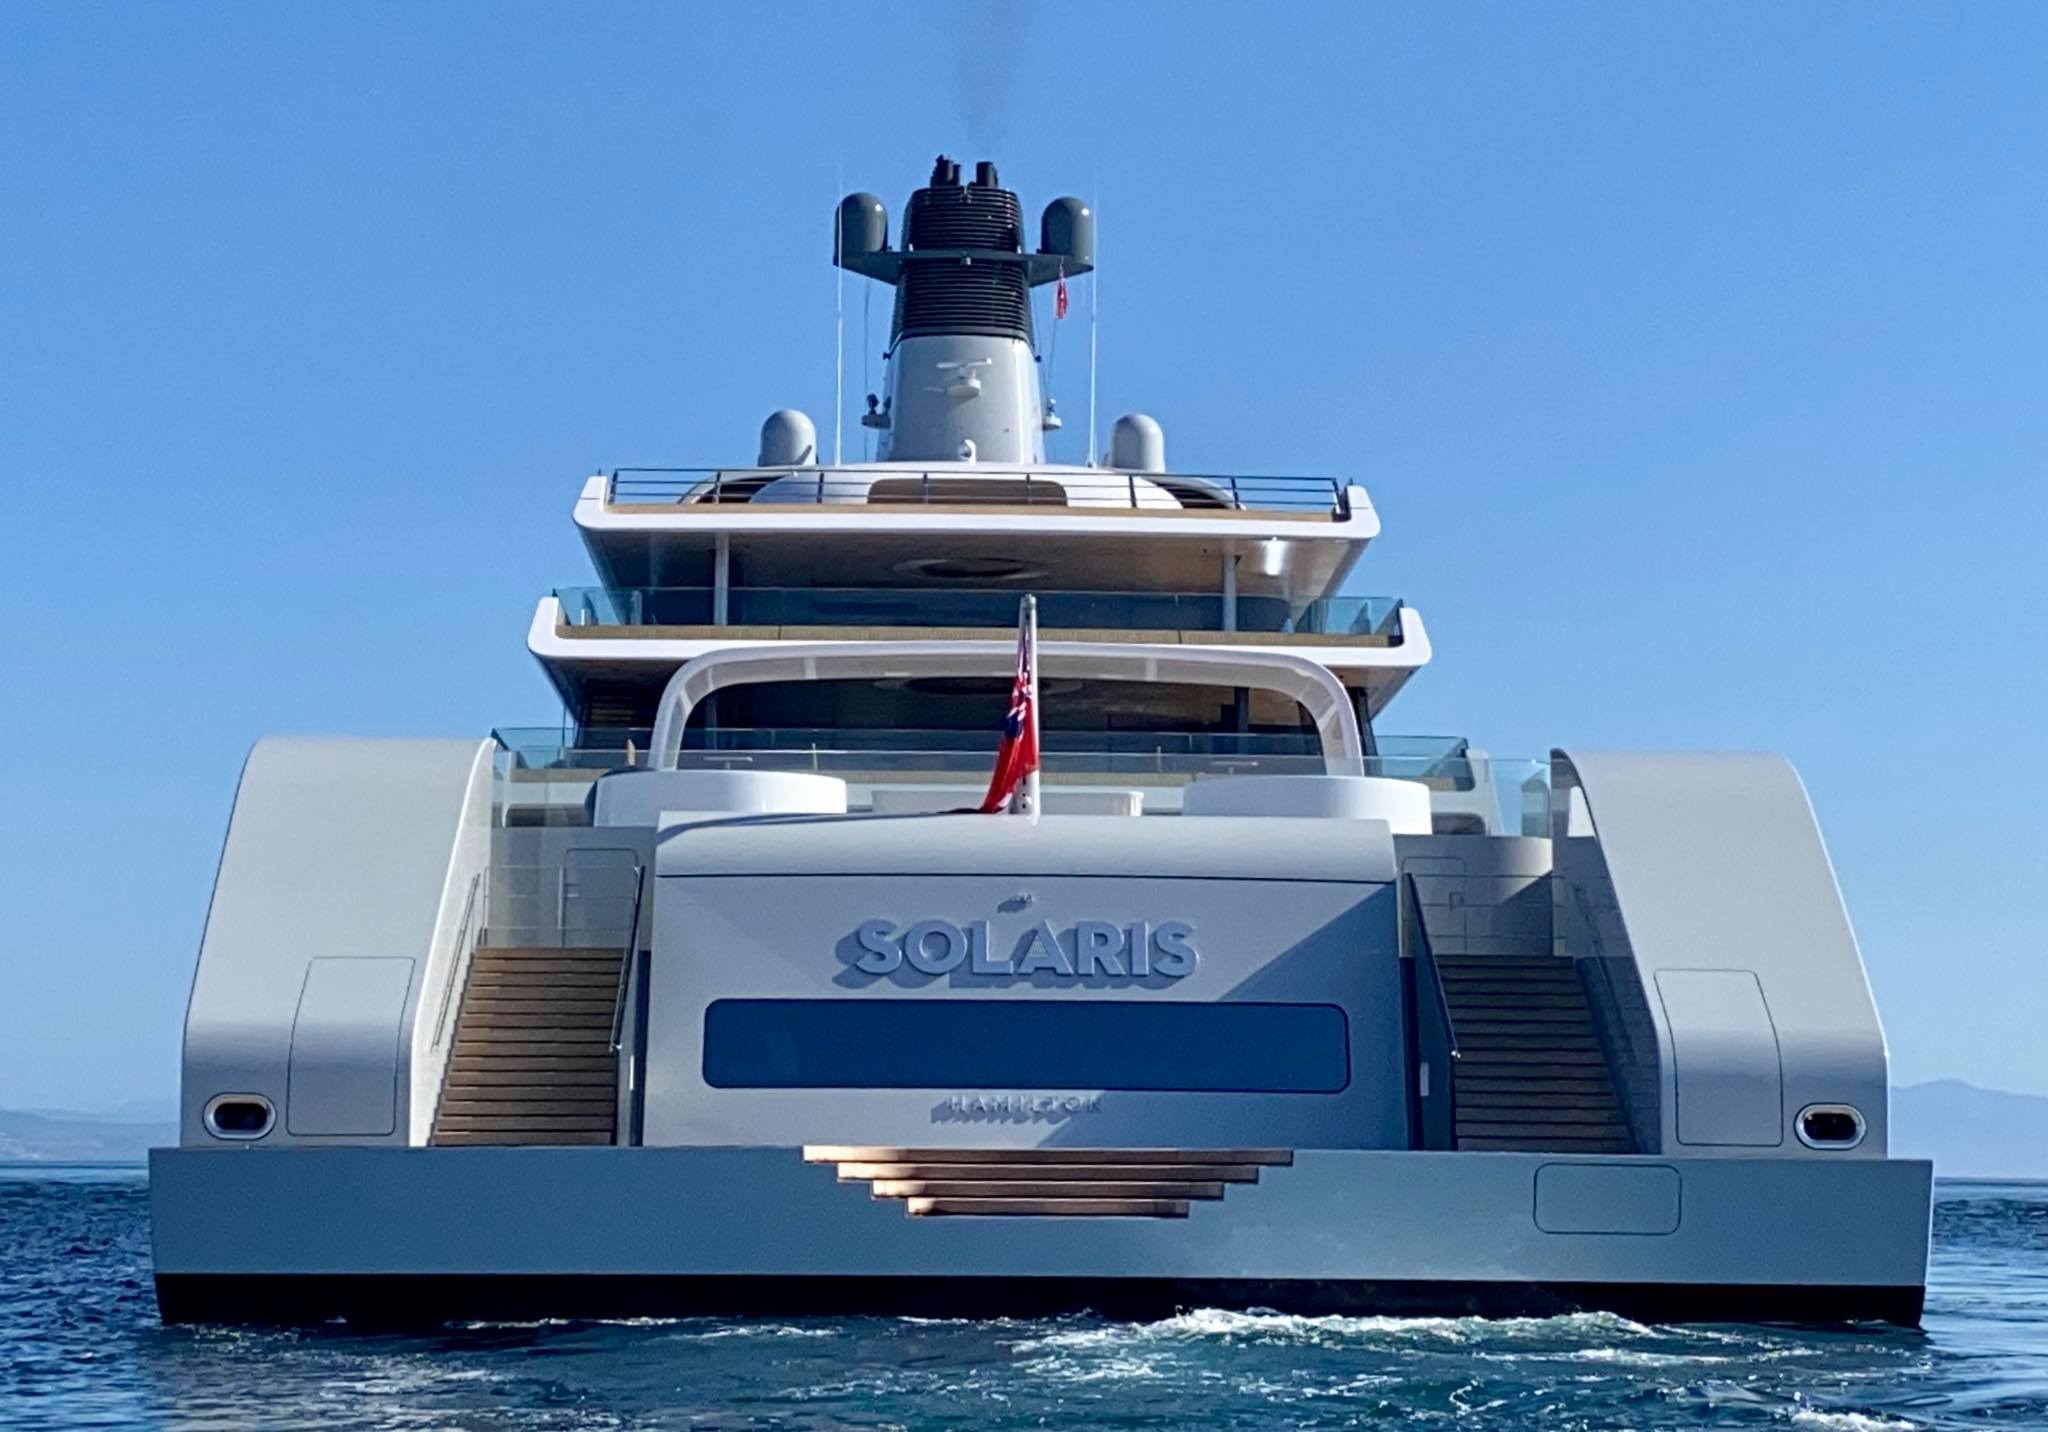 SOLARIS Yate - Lloyd Werft - 2021 - propietario Roman Abramovich